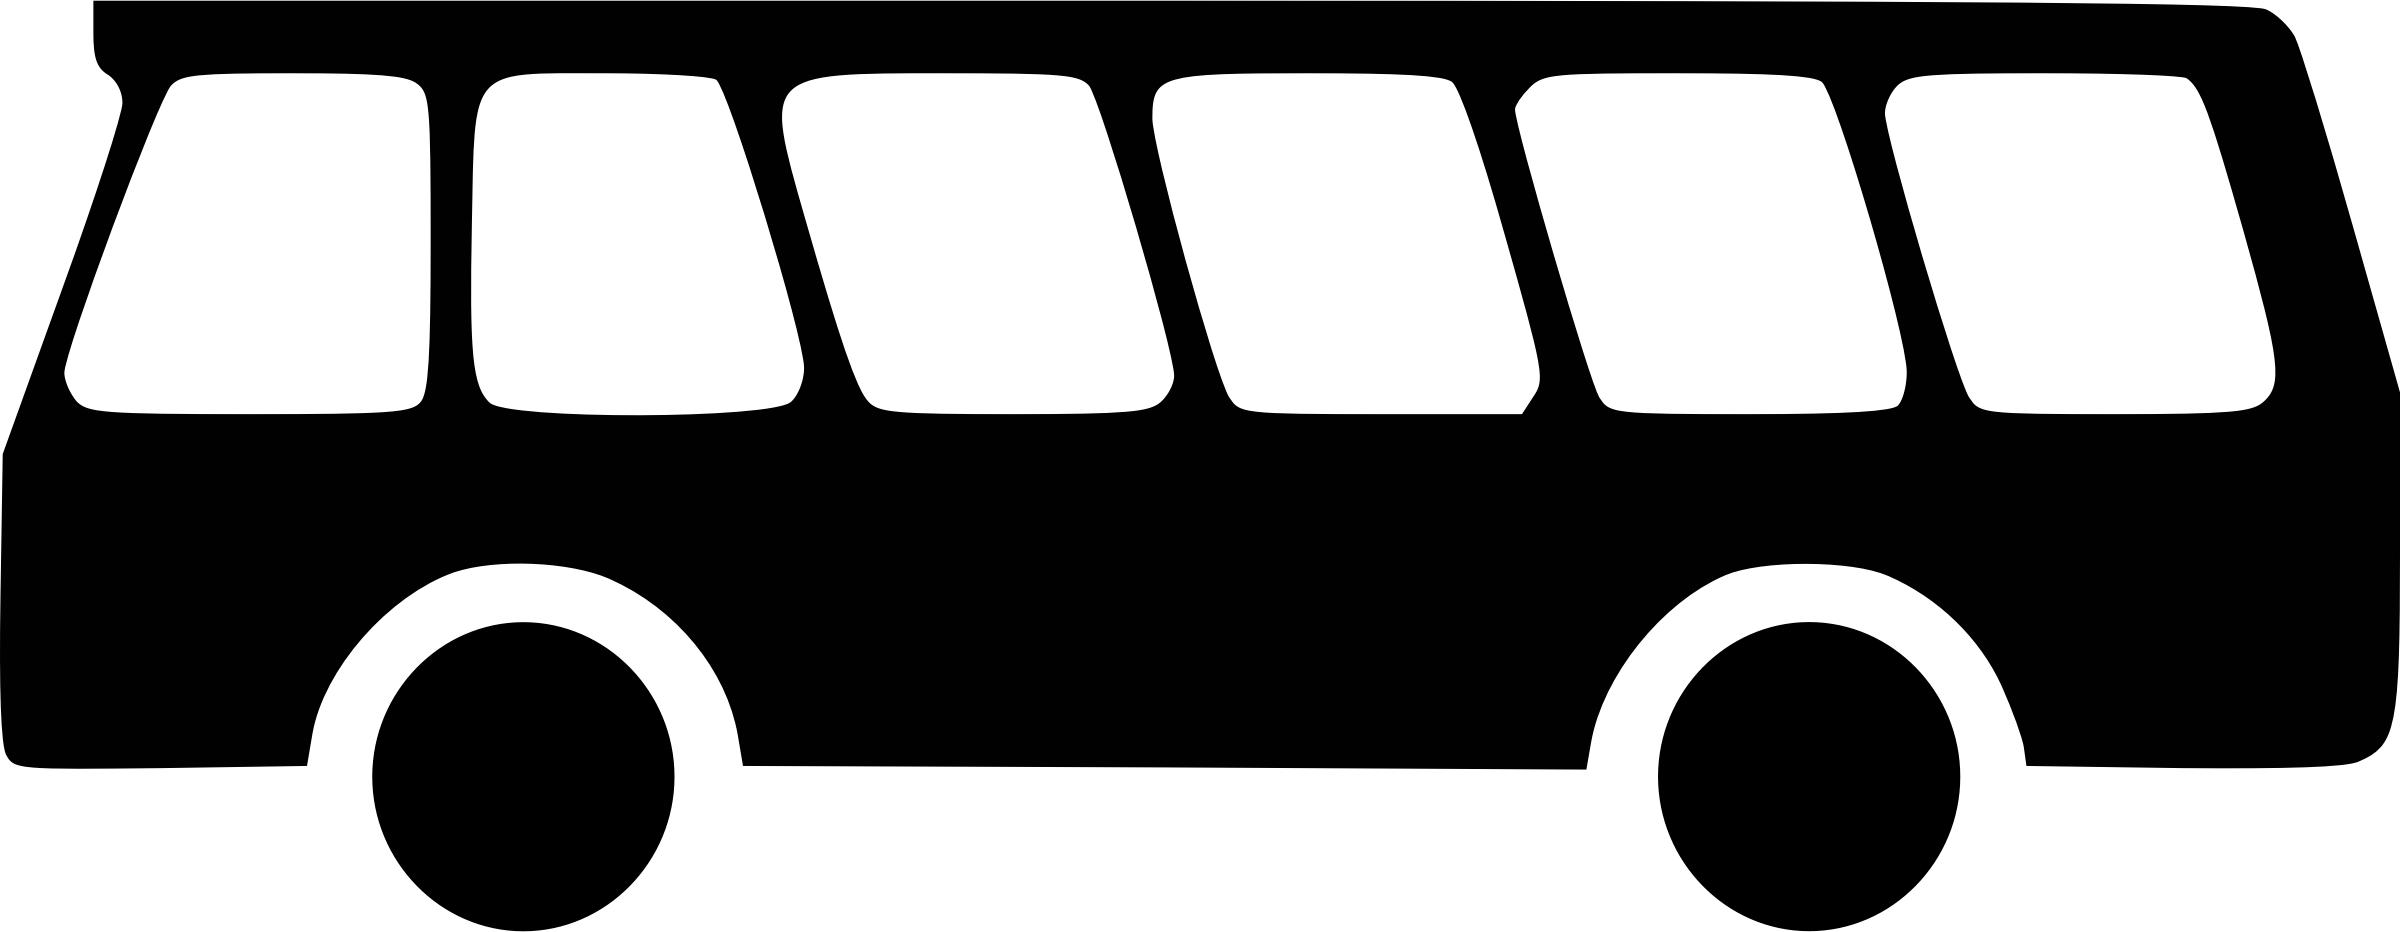 Clipart - Bus symbol / pictogram